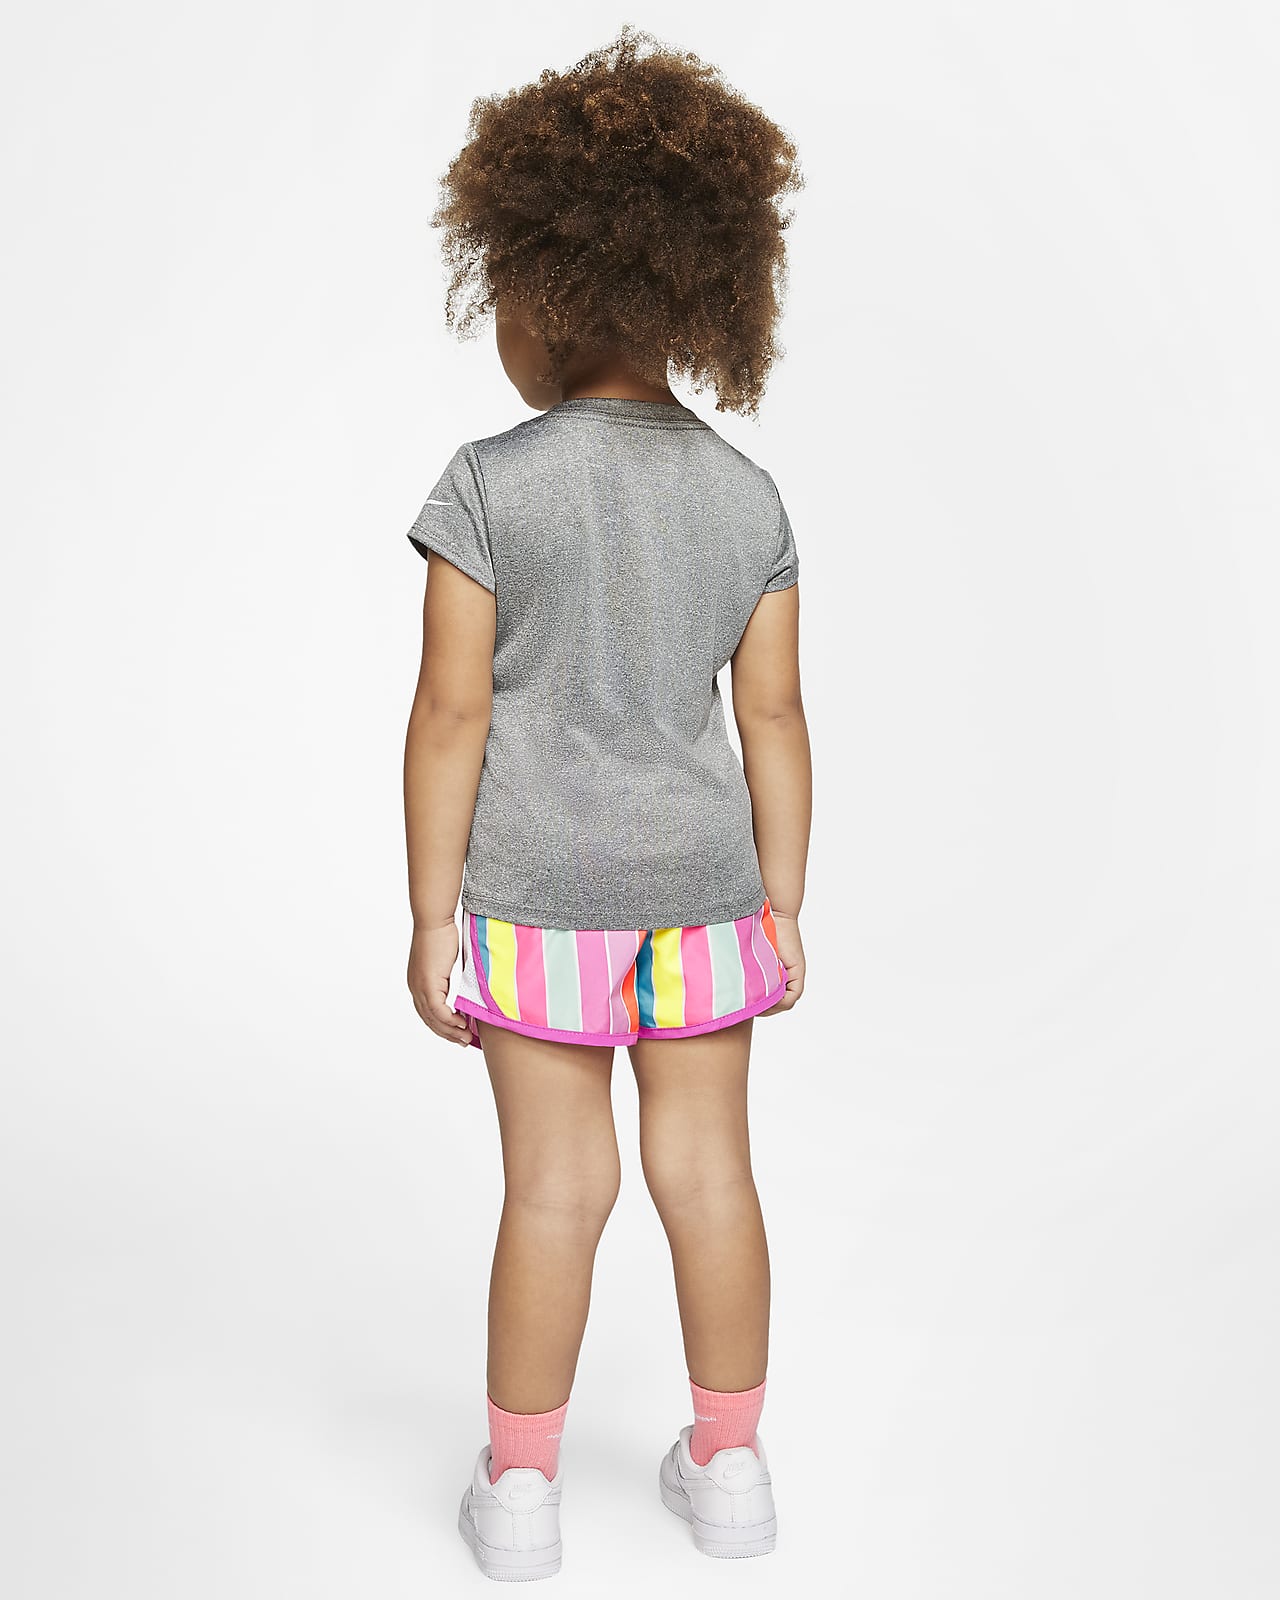 Nike Dri-FIT Toddler T-Shirt and Shorts 